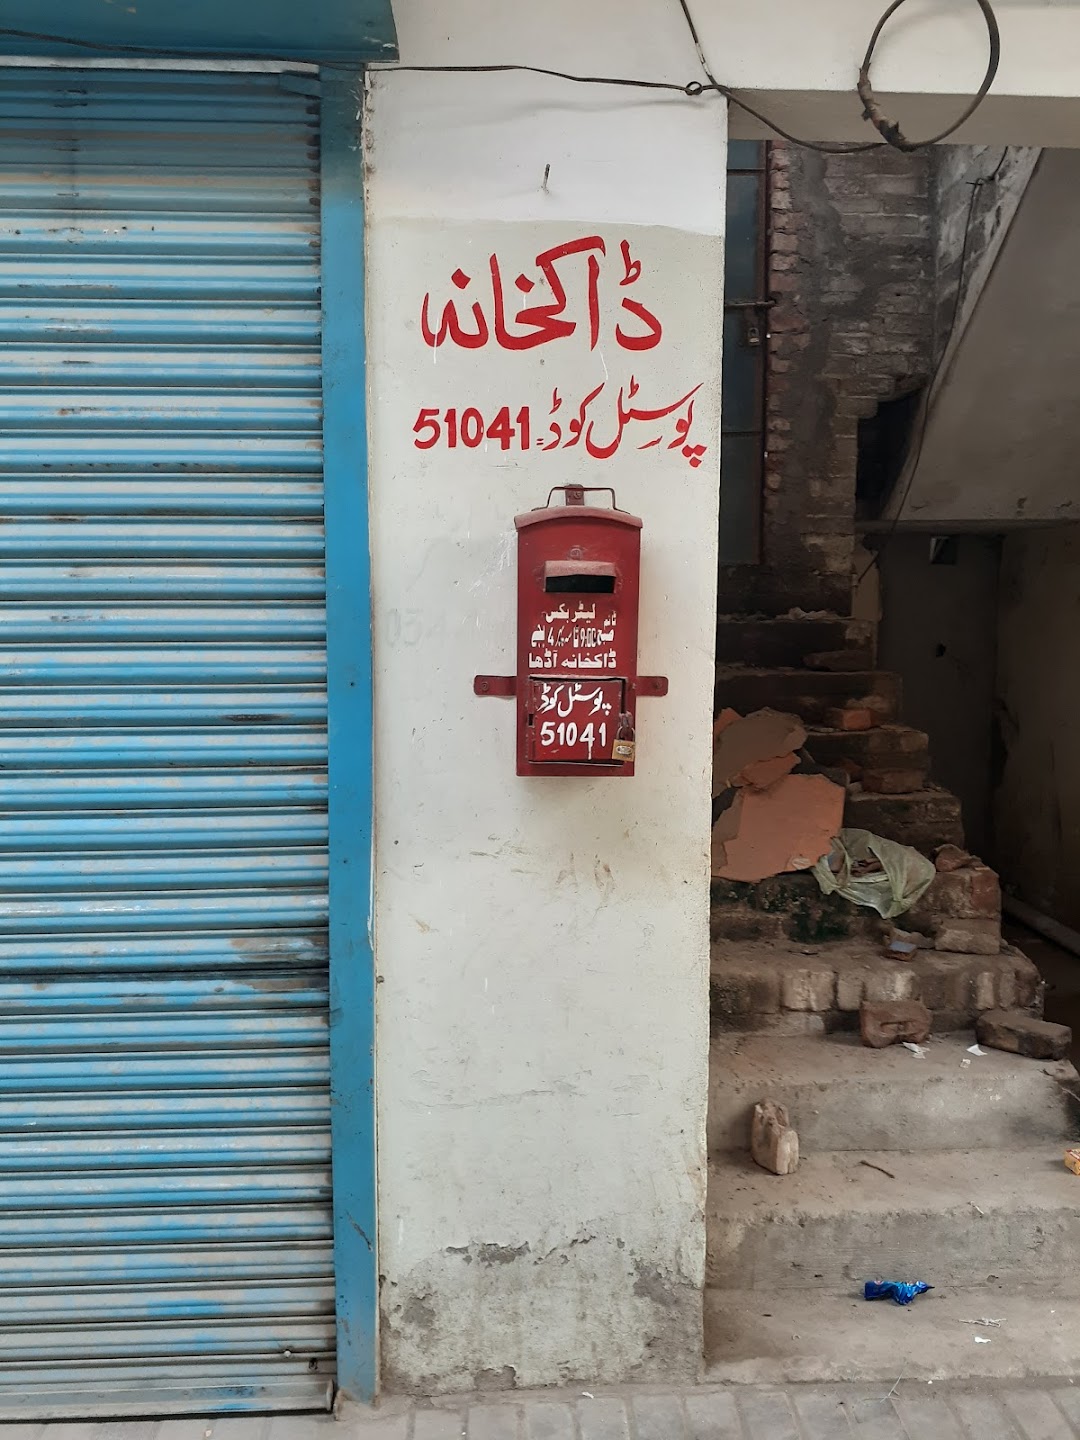 Post office Adha Sialkot 51041